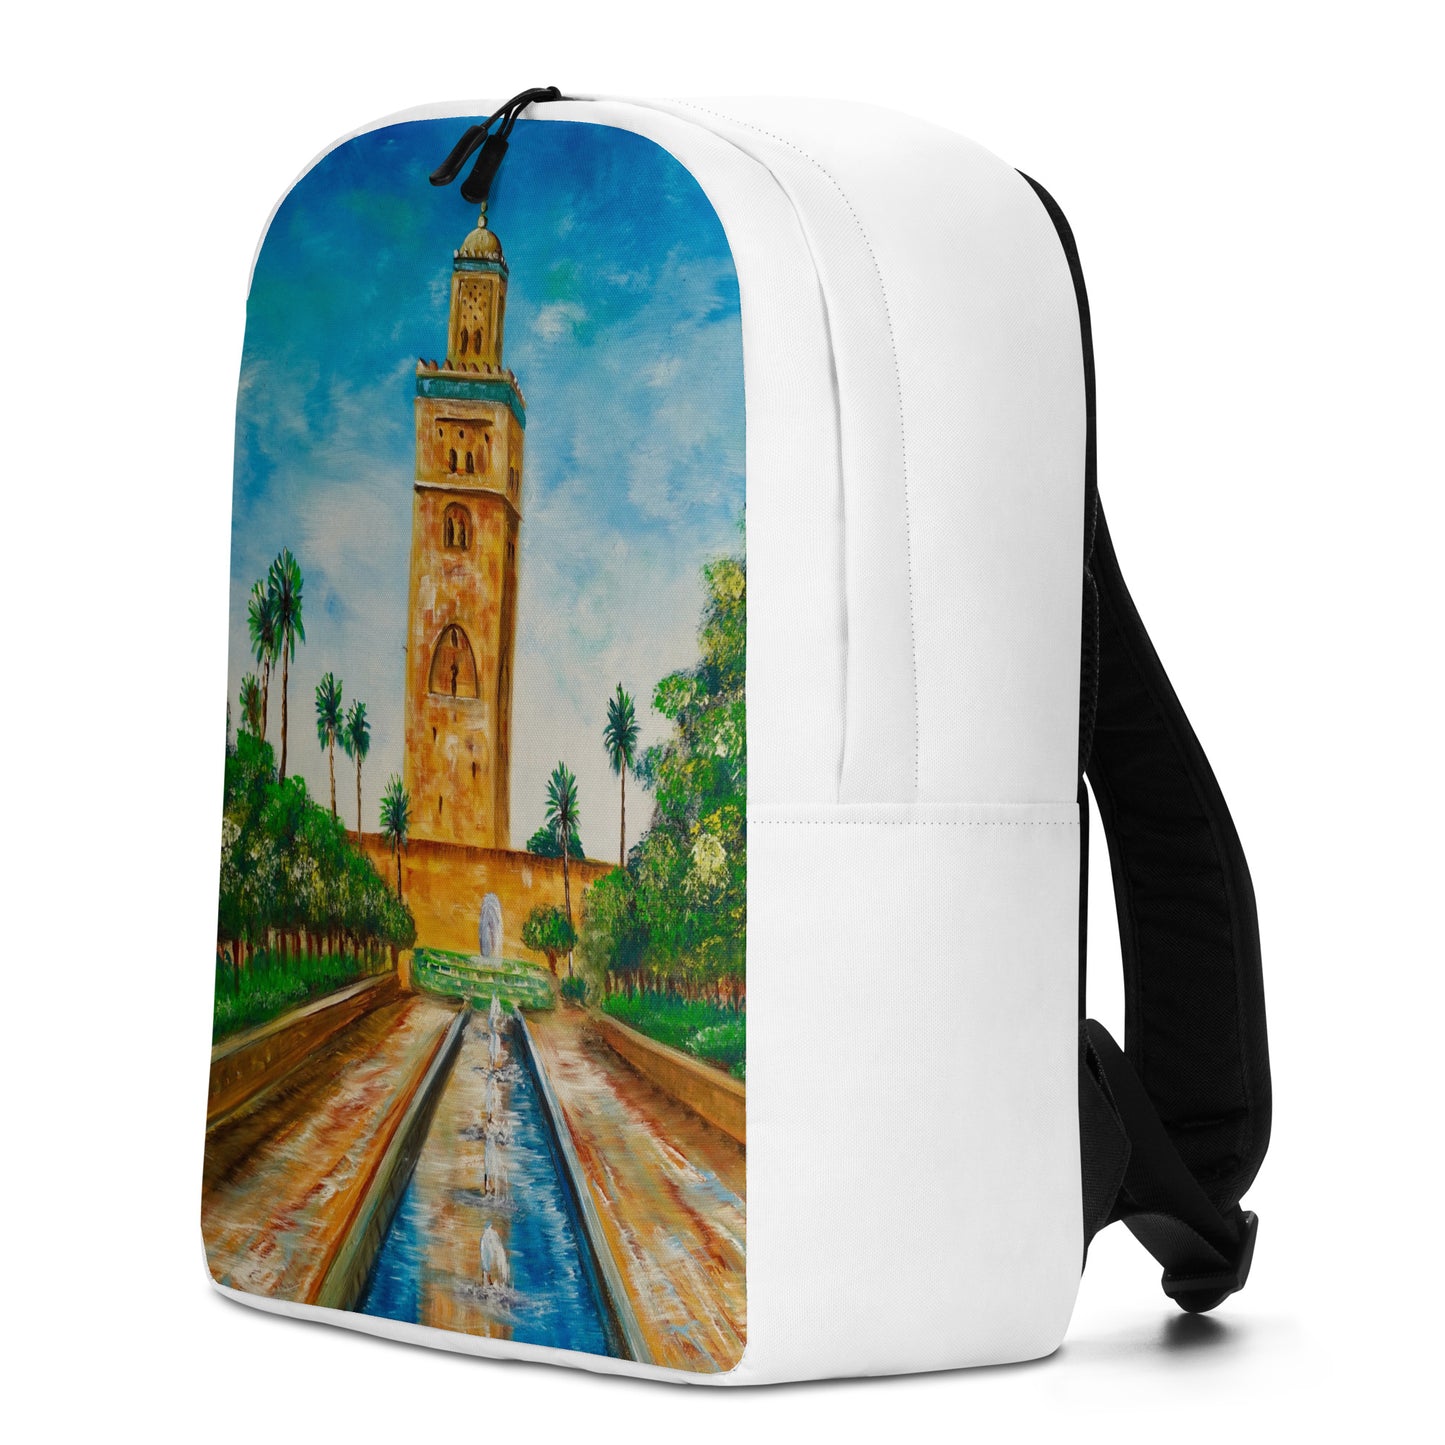 Backpack "The mosque of Marrakech" Ideal for laptop Secret pocket Travel Art